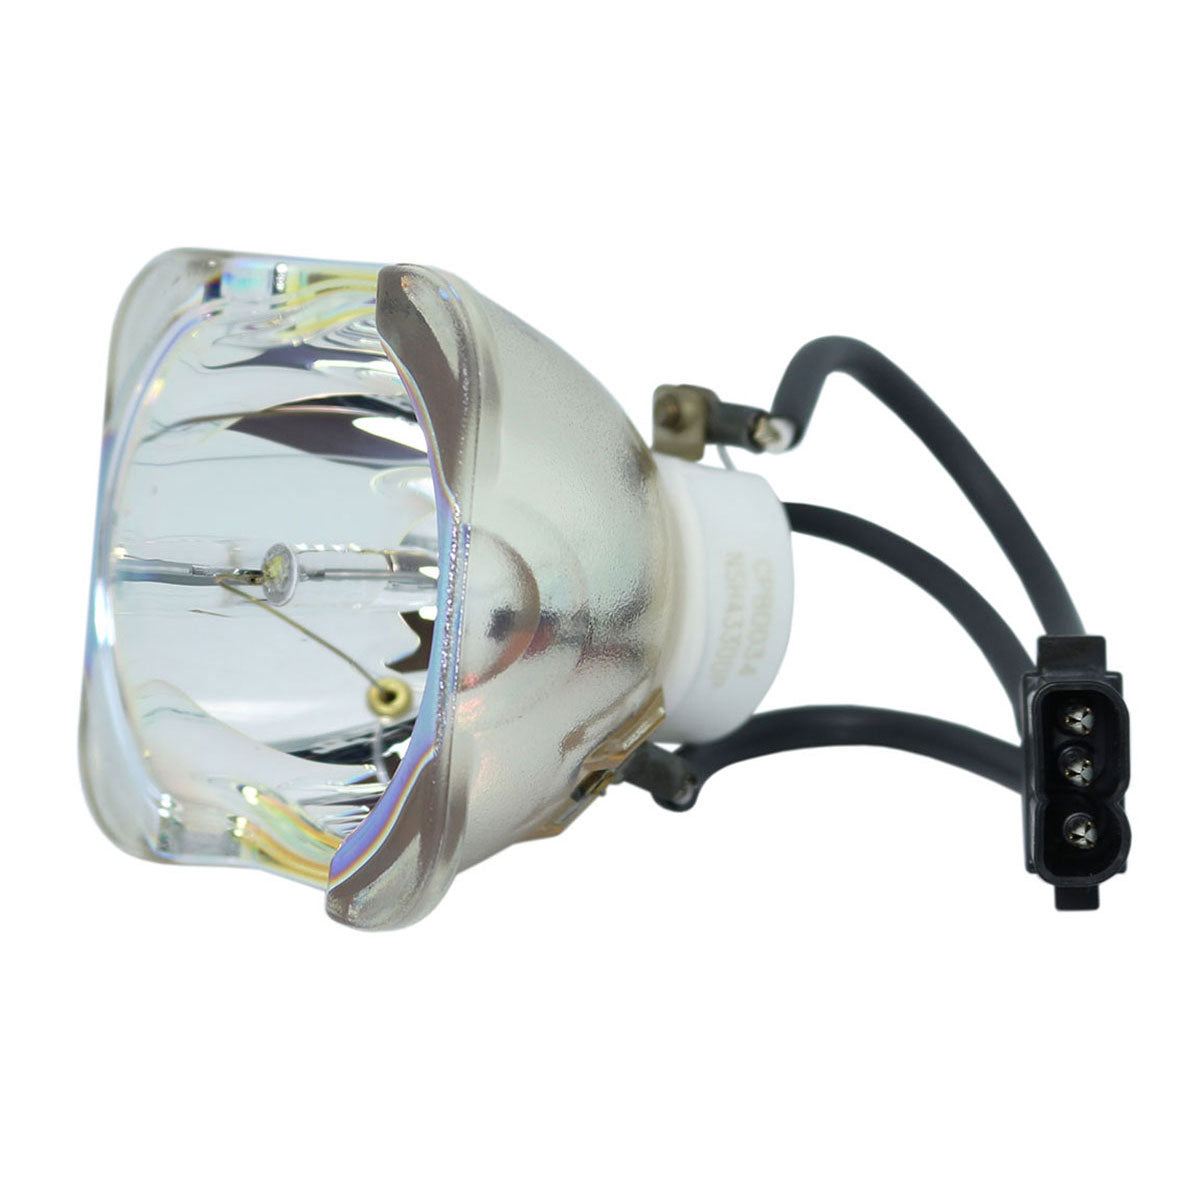 ASK Proxima 420031500 Ushio Projector Bare Lamp